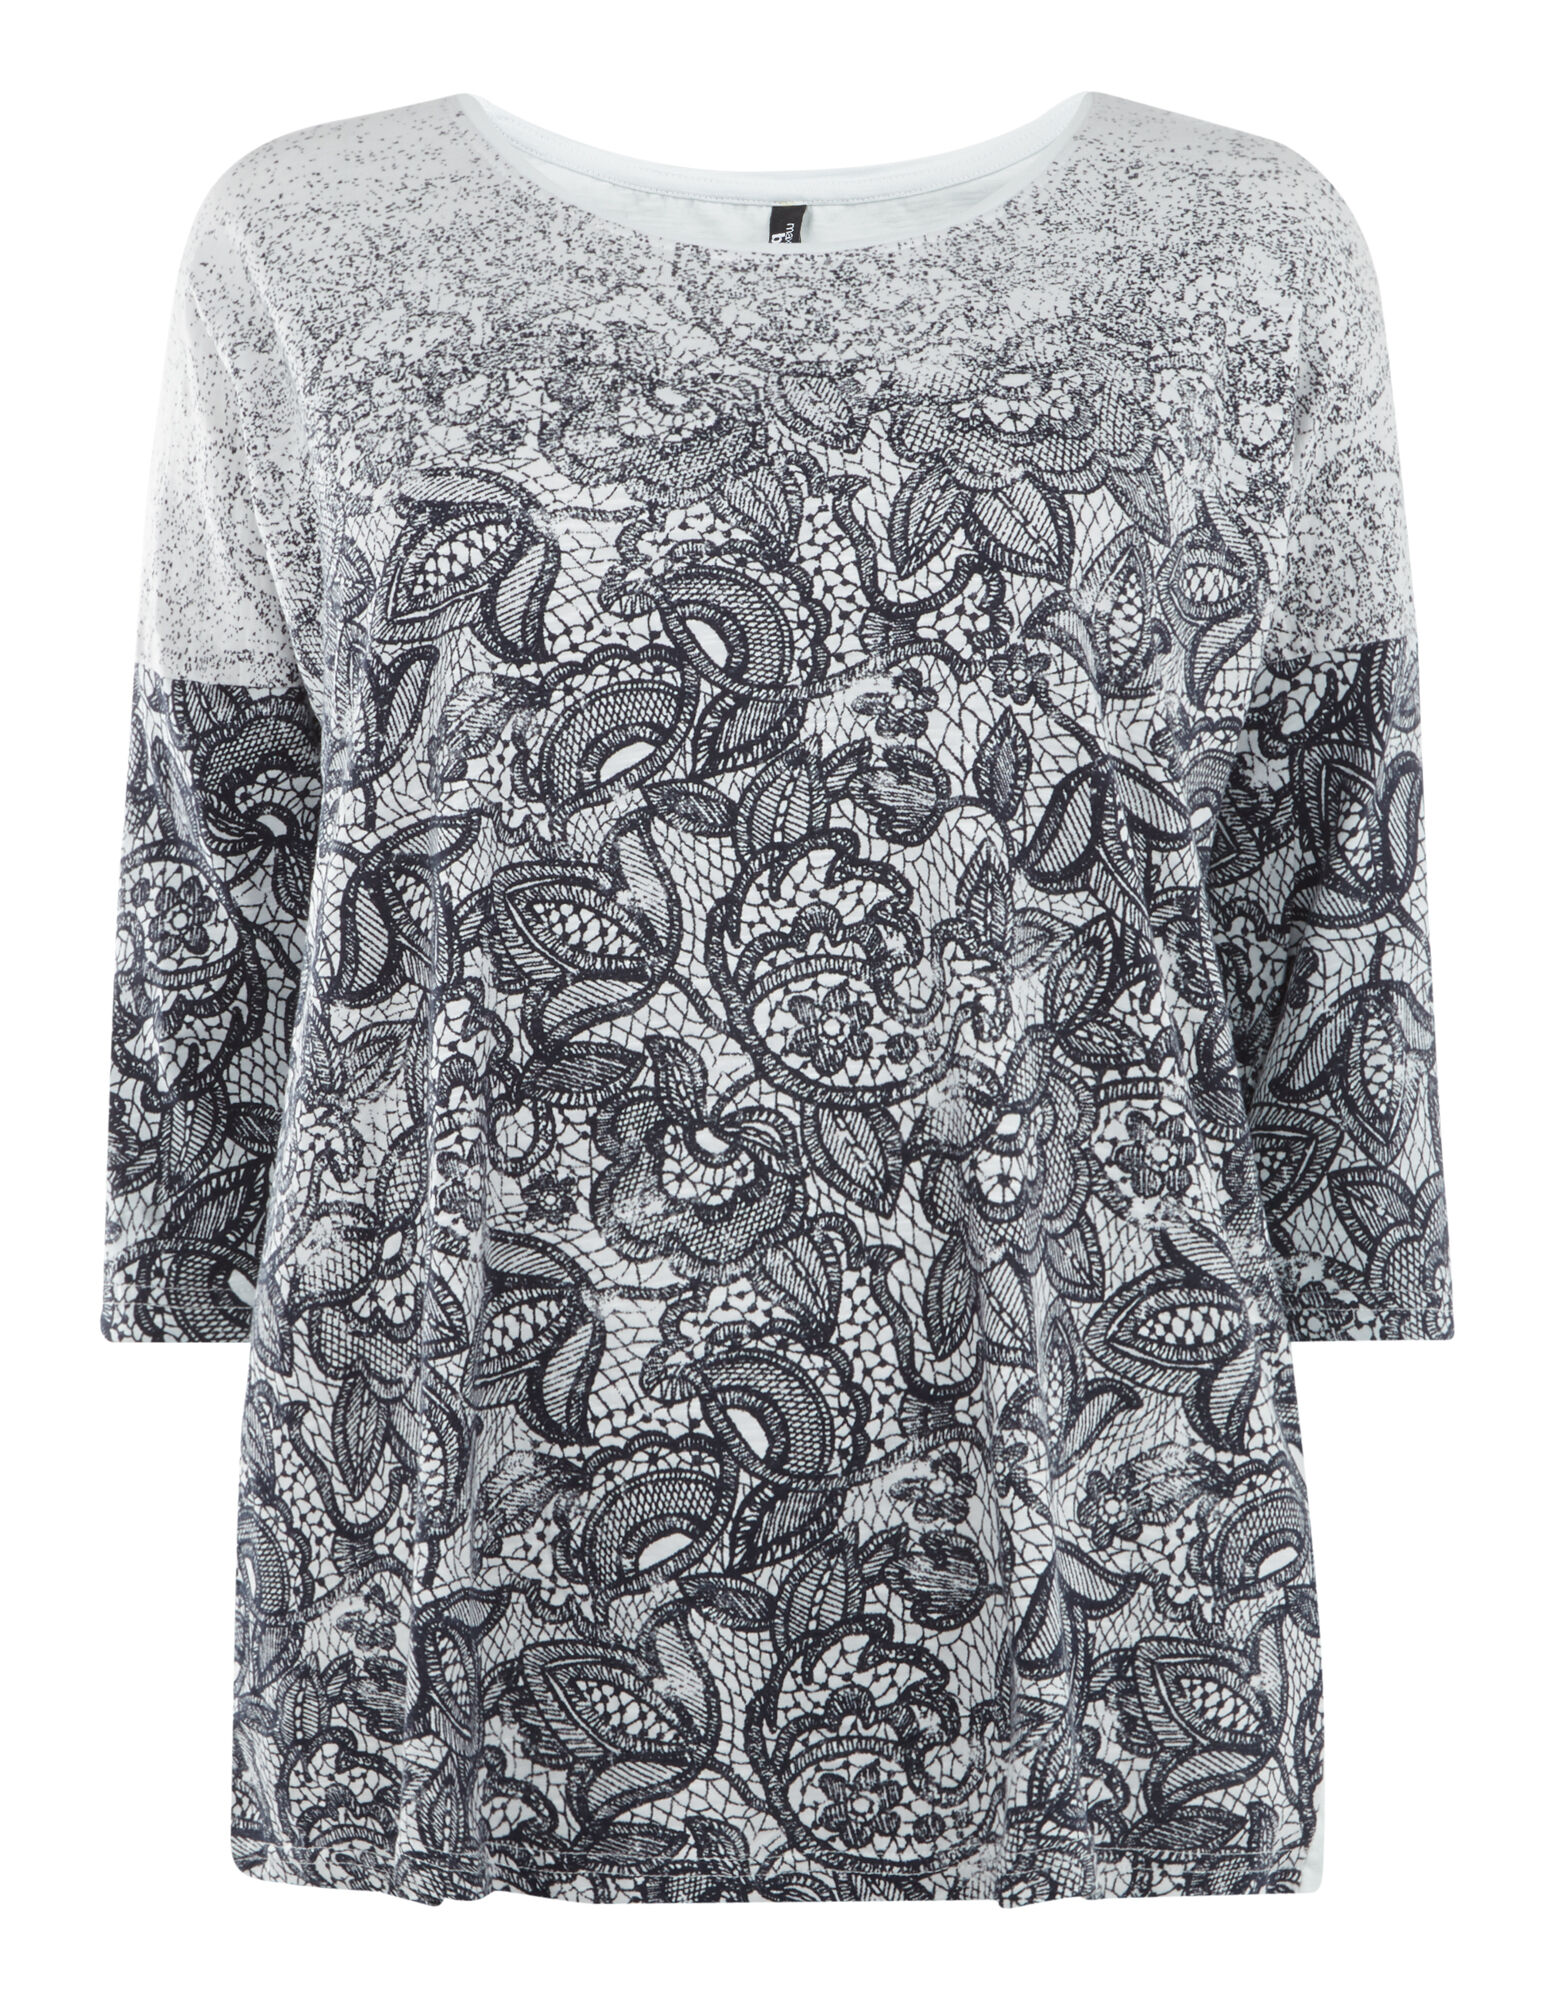 Damen Shirt mit ornamentalem Muster